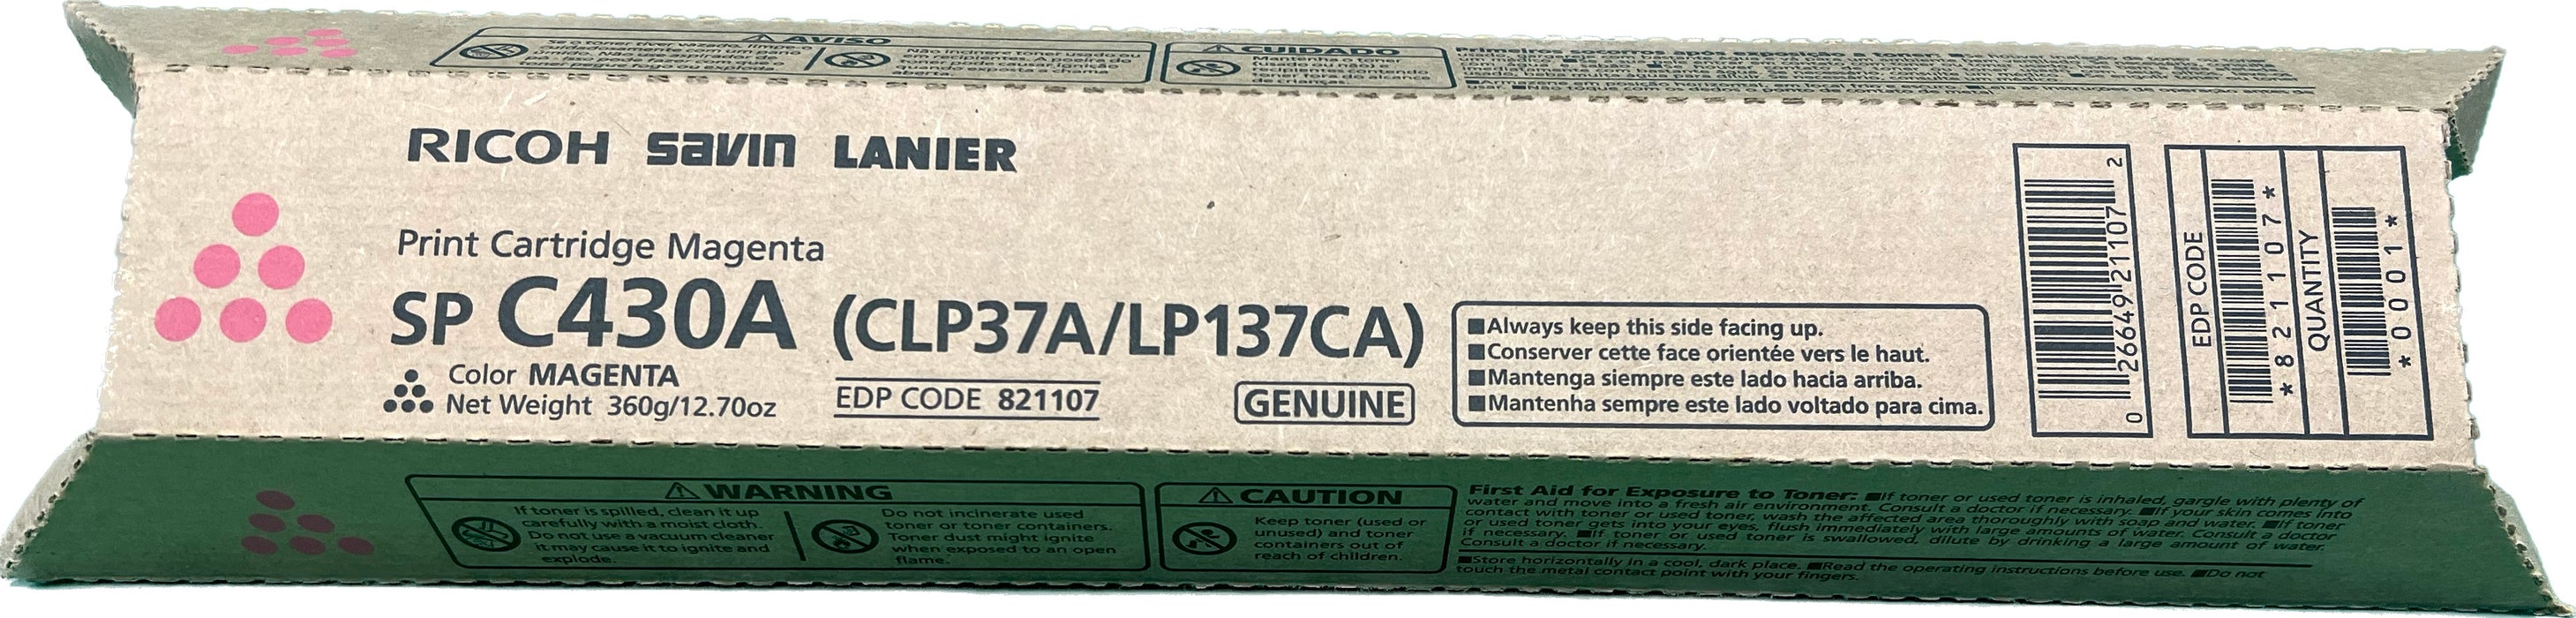 Genuine Ricoh Magenta Toner Cartridge | 821107 | SP C430A (CLP37A/LP137CA)